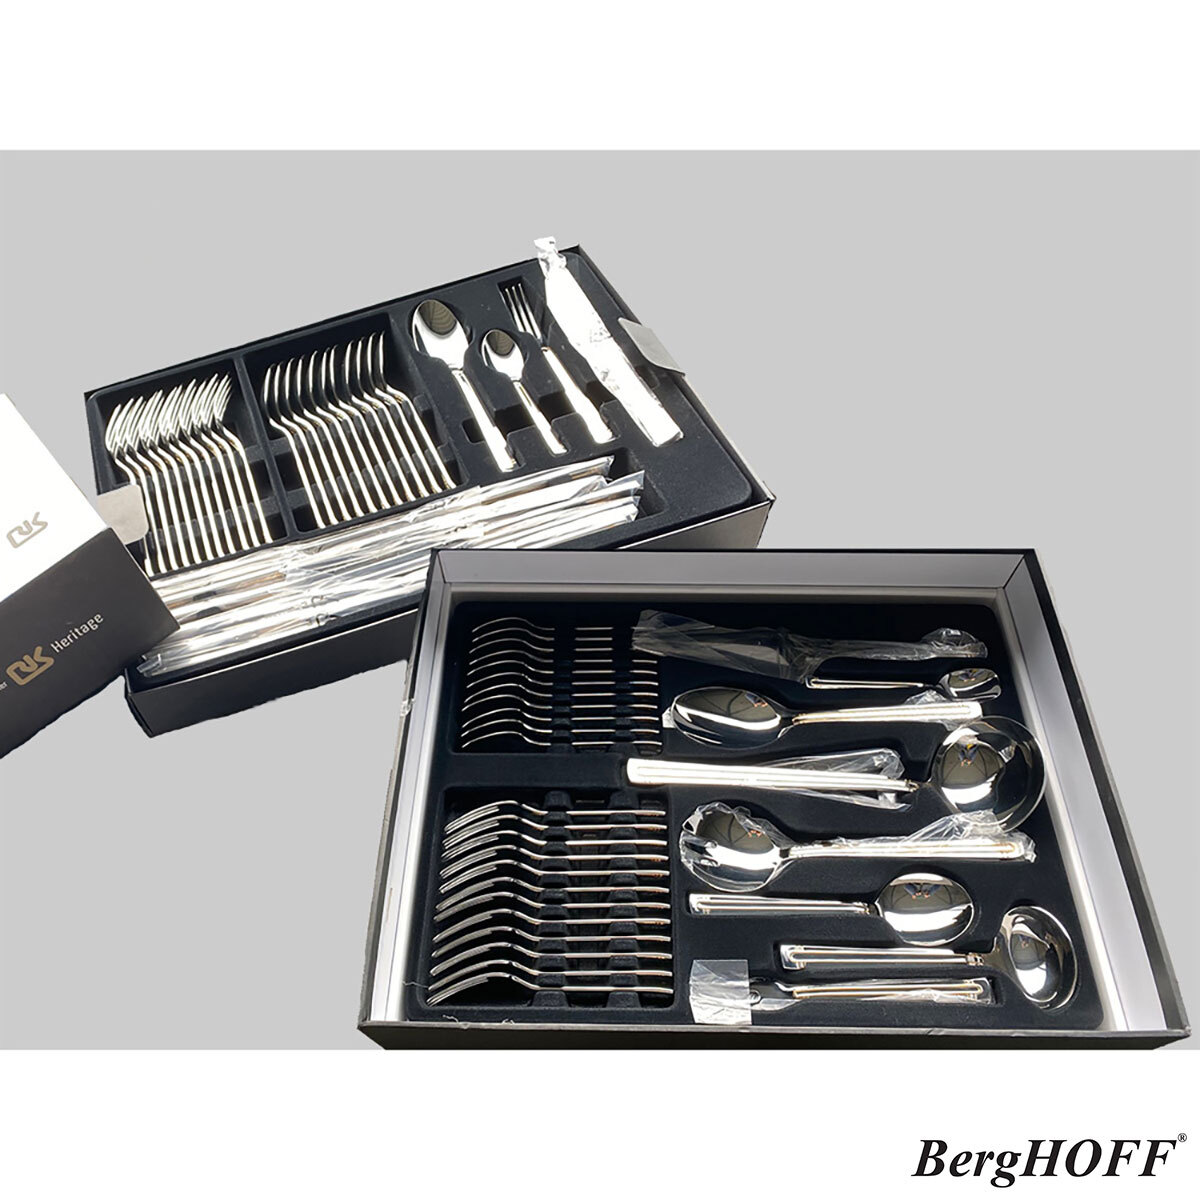 BergHOFF Essentials Heritage Stainless Steel Cutlery Set, 72 Piece